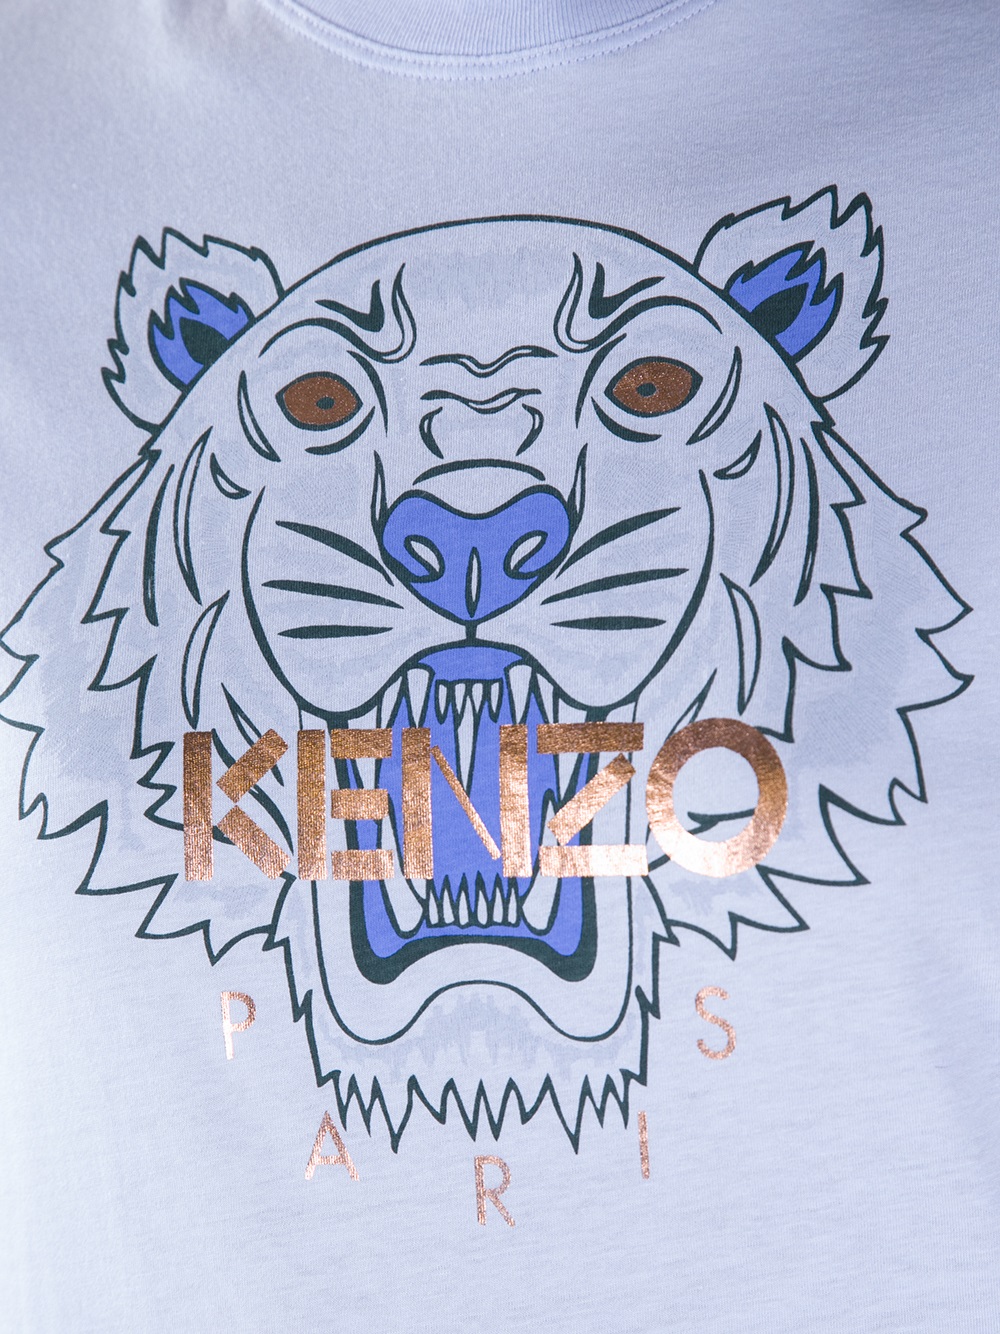 Lyst - Kenzo Tiger Print T-Shirt in Blue